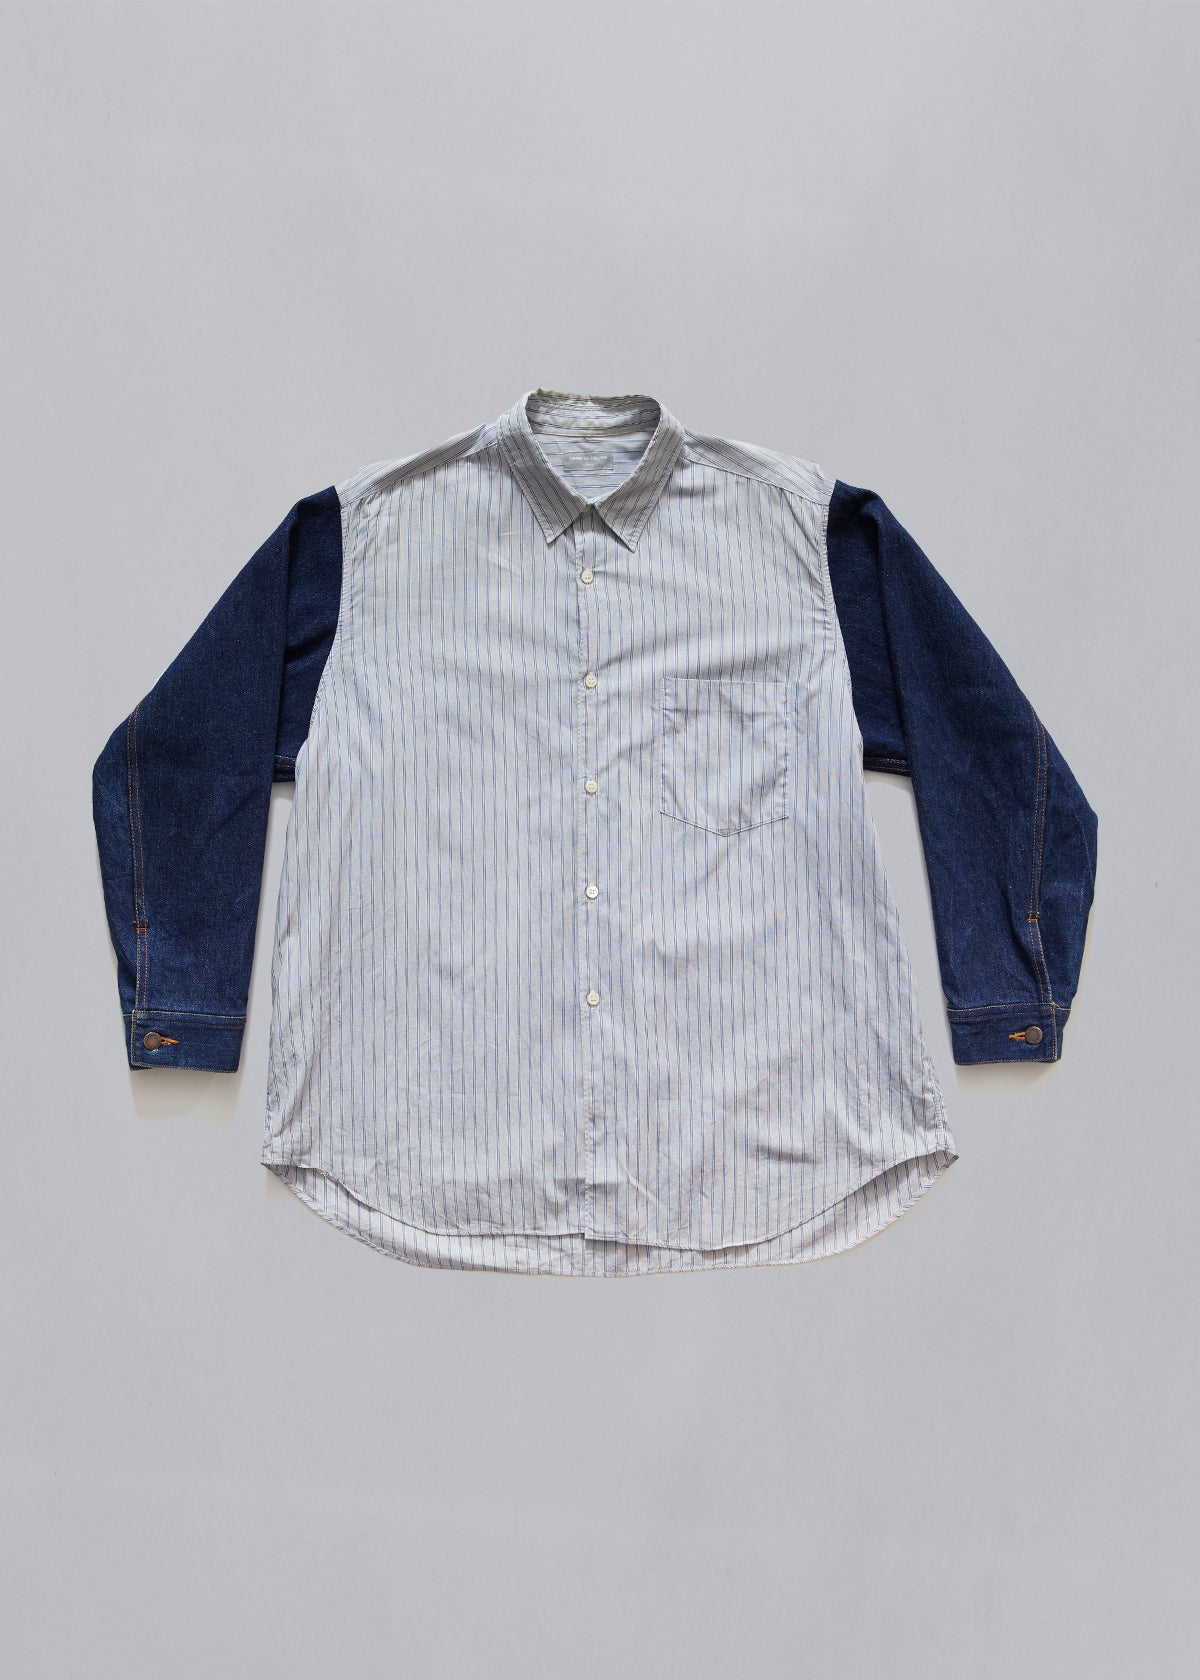 CDG Homme Denim Sleeves Striped Shirt 1980's - Medium